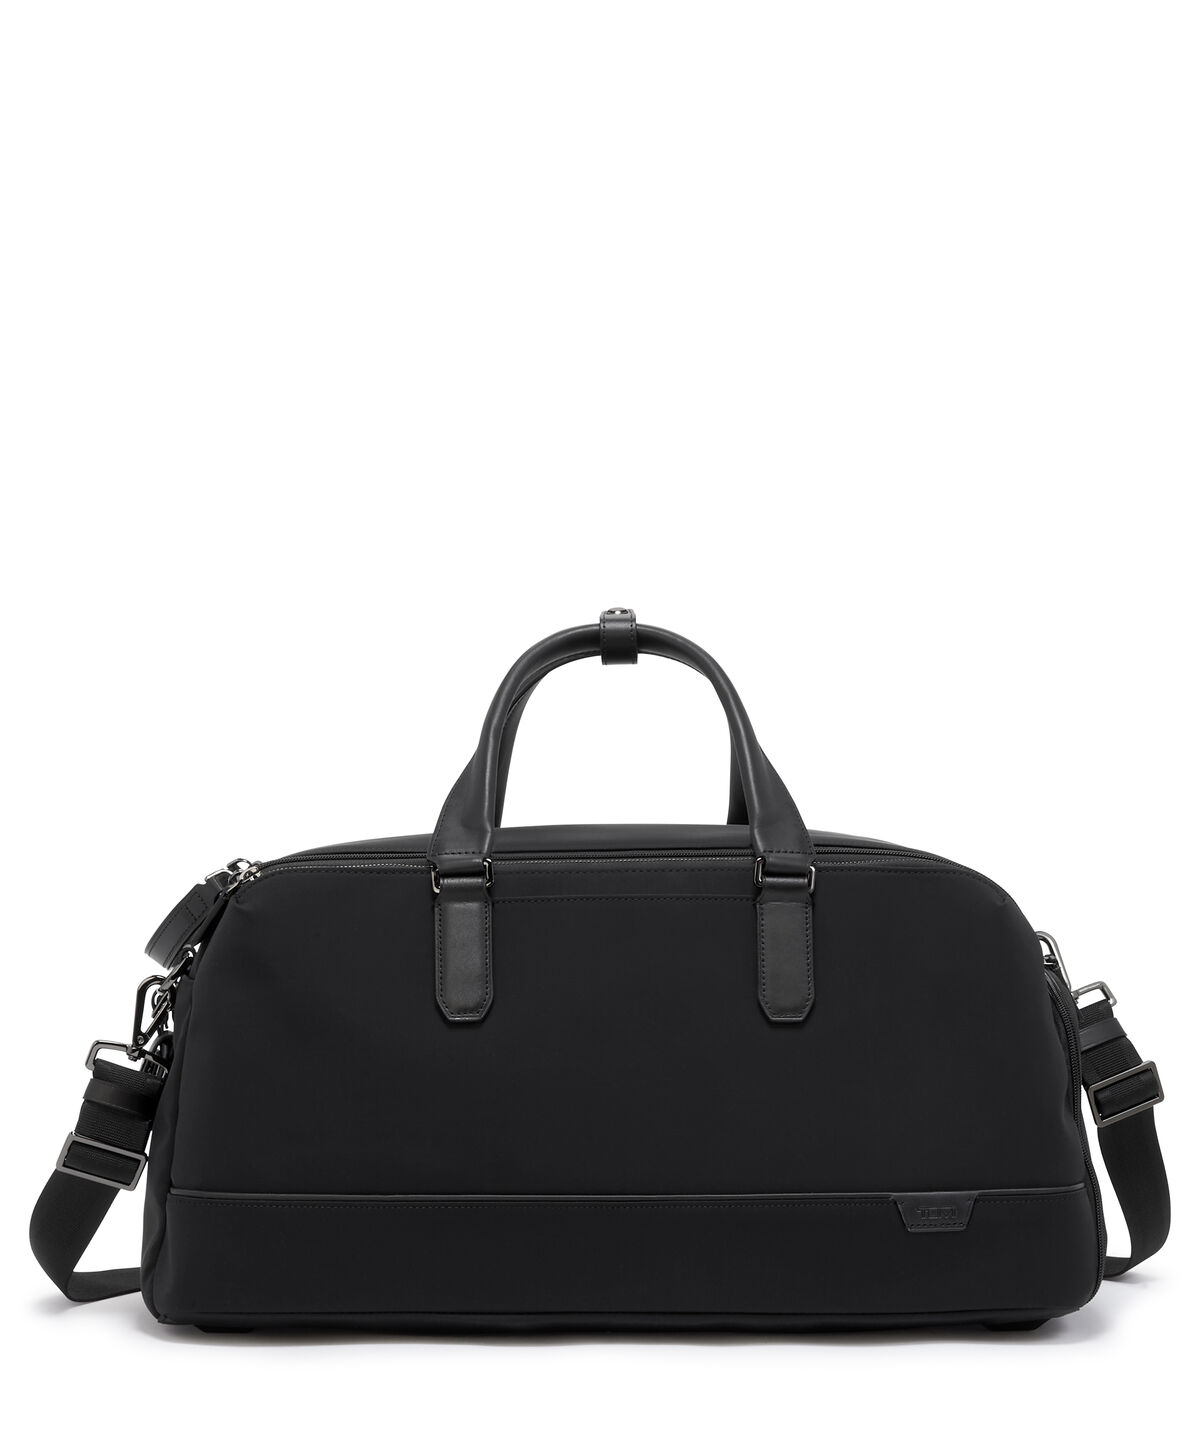 Shop Danskin Duffel Bag (Black) – Luggage Factory